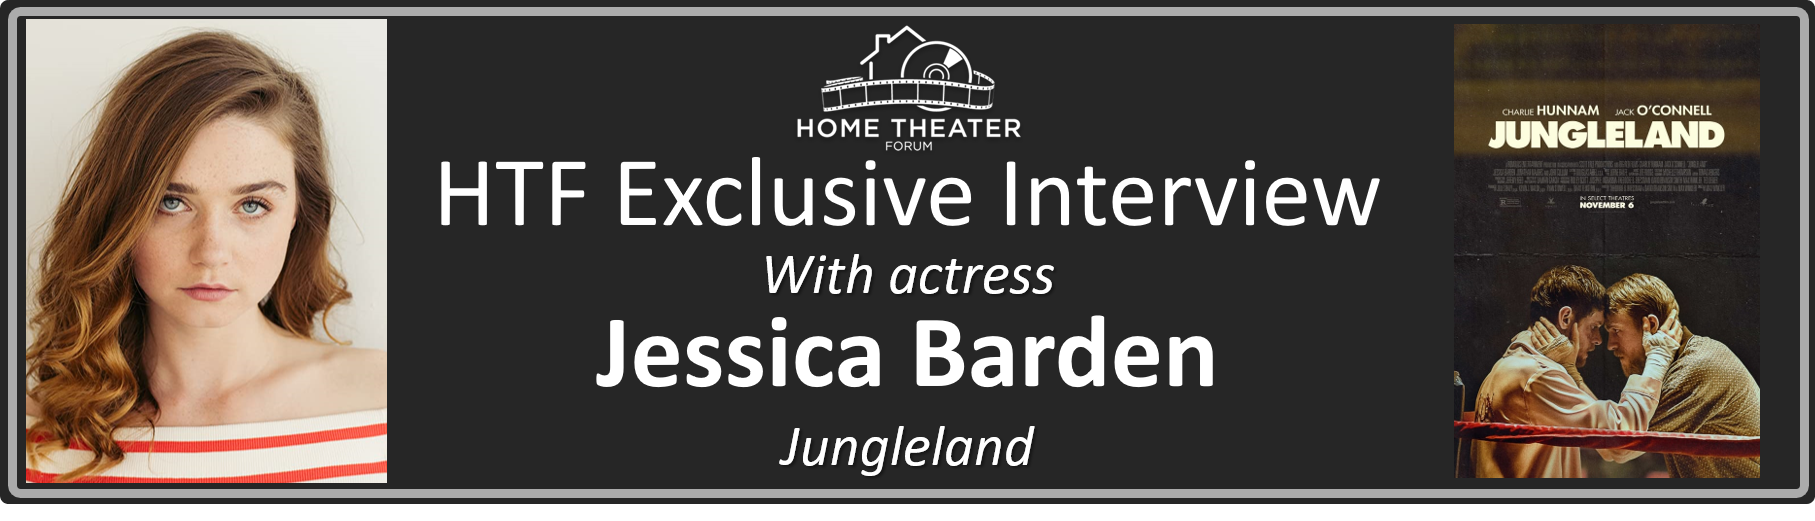 HTF_Interview_Jessica_Barden_Jungleland.png